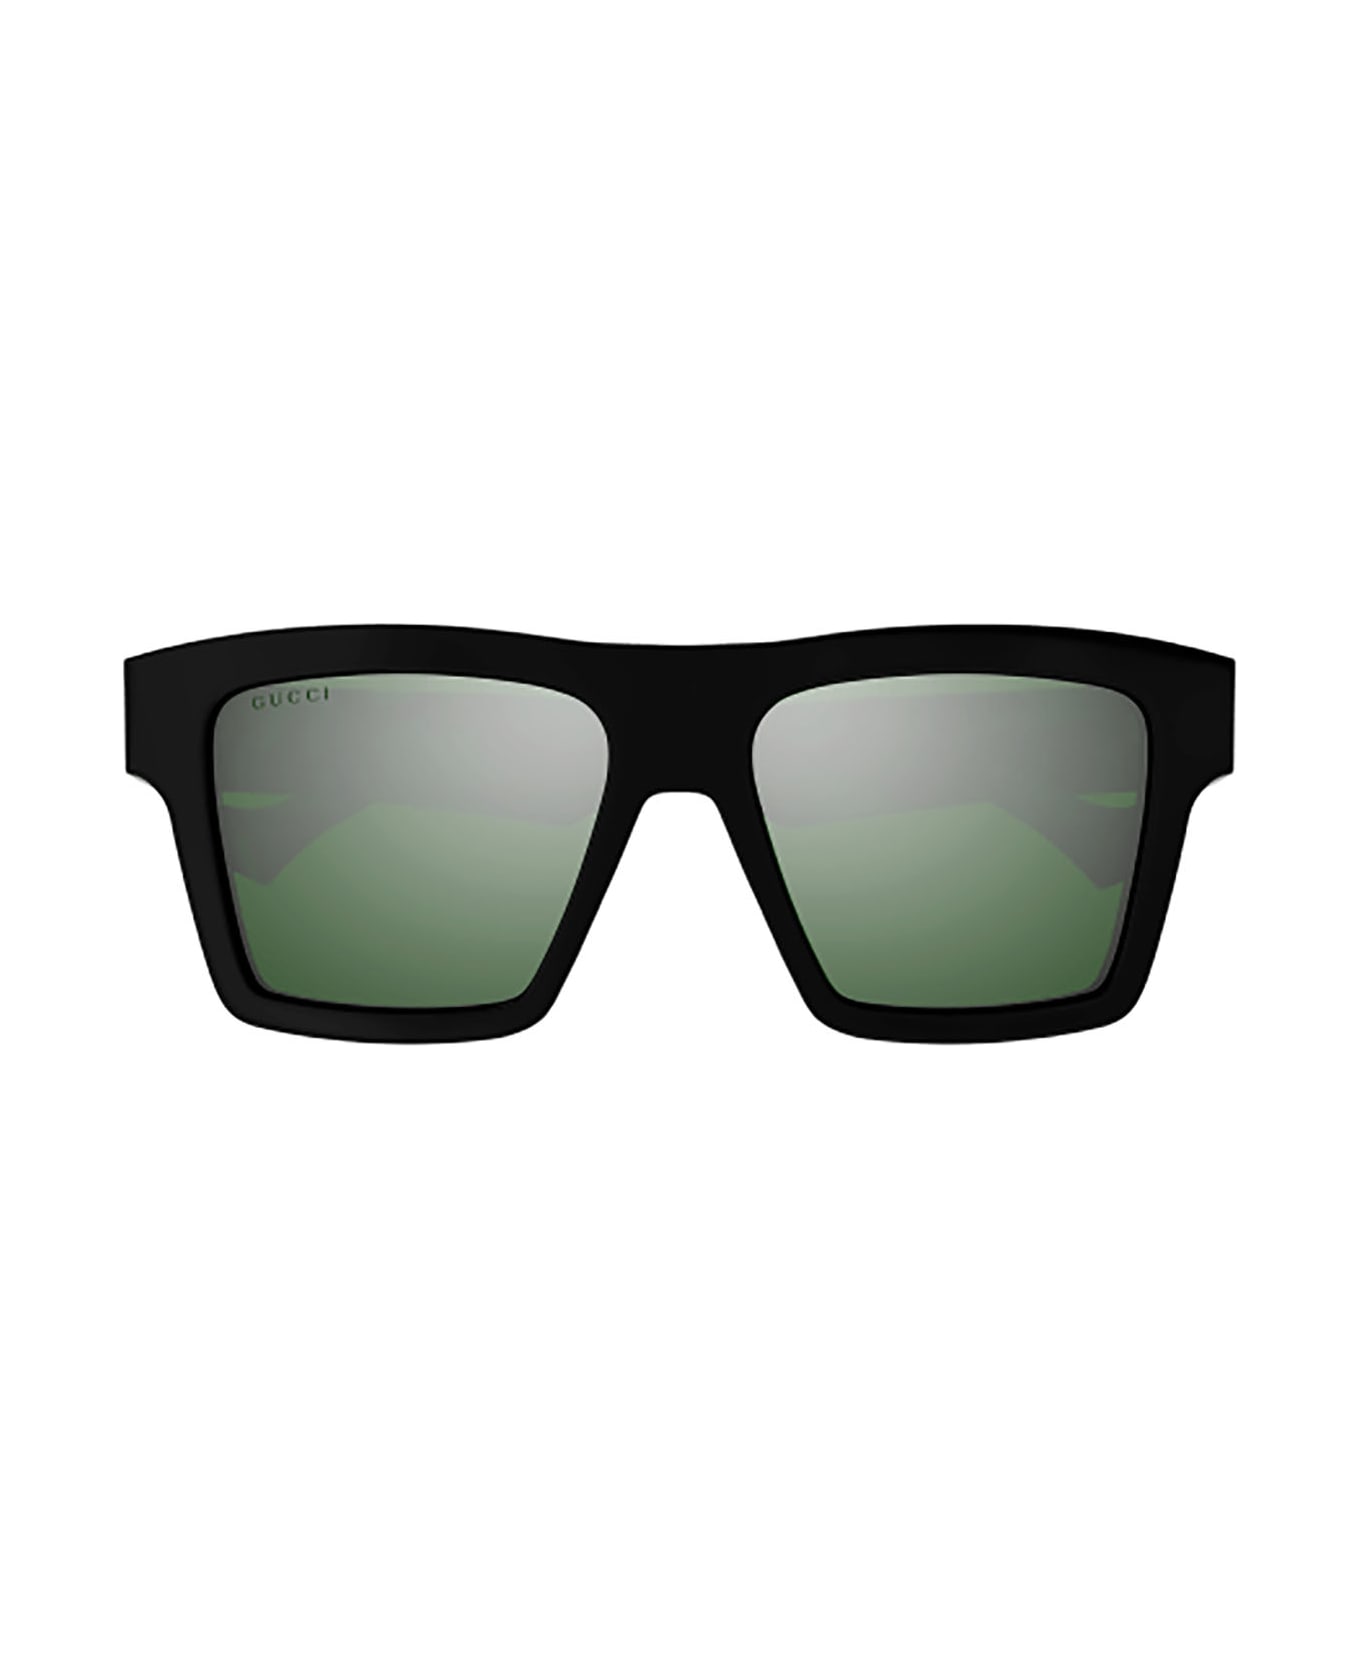 Gucci Eyewear GG0962S Sunglasses - Black Havana Green